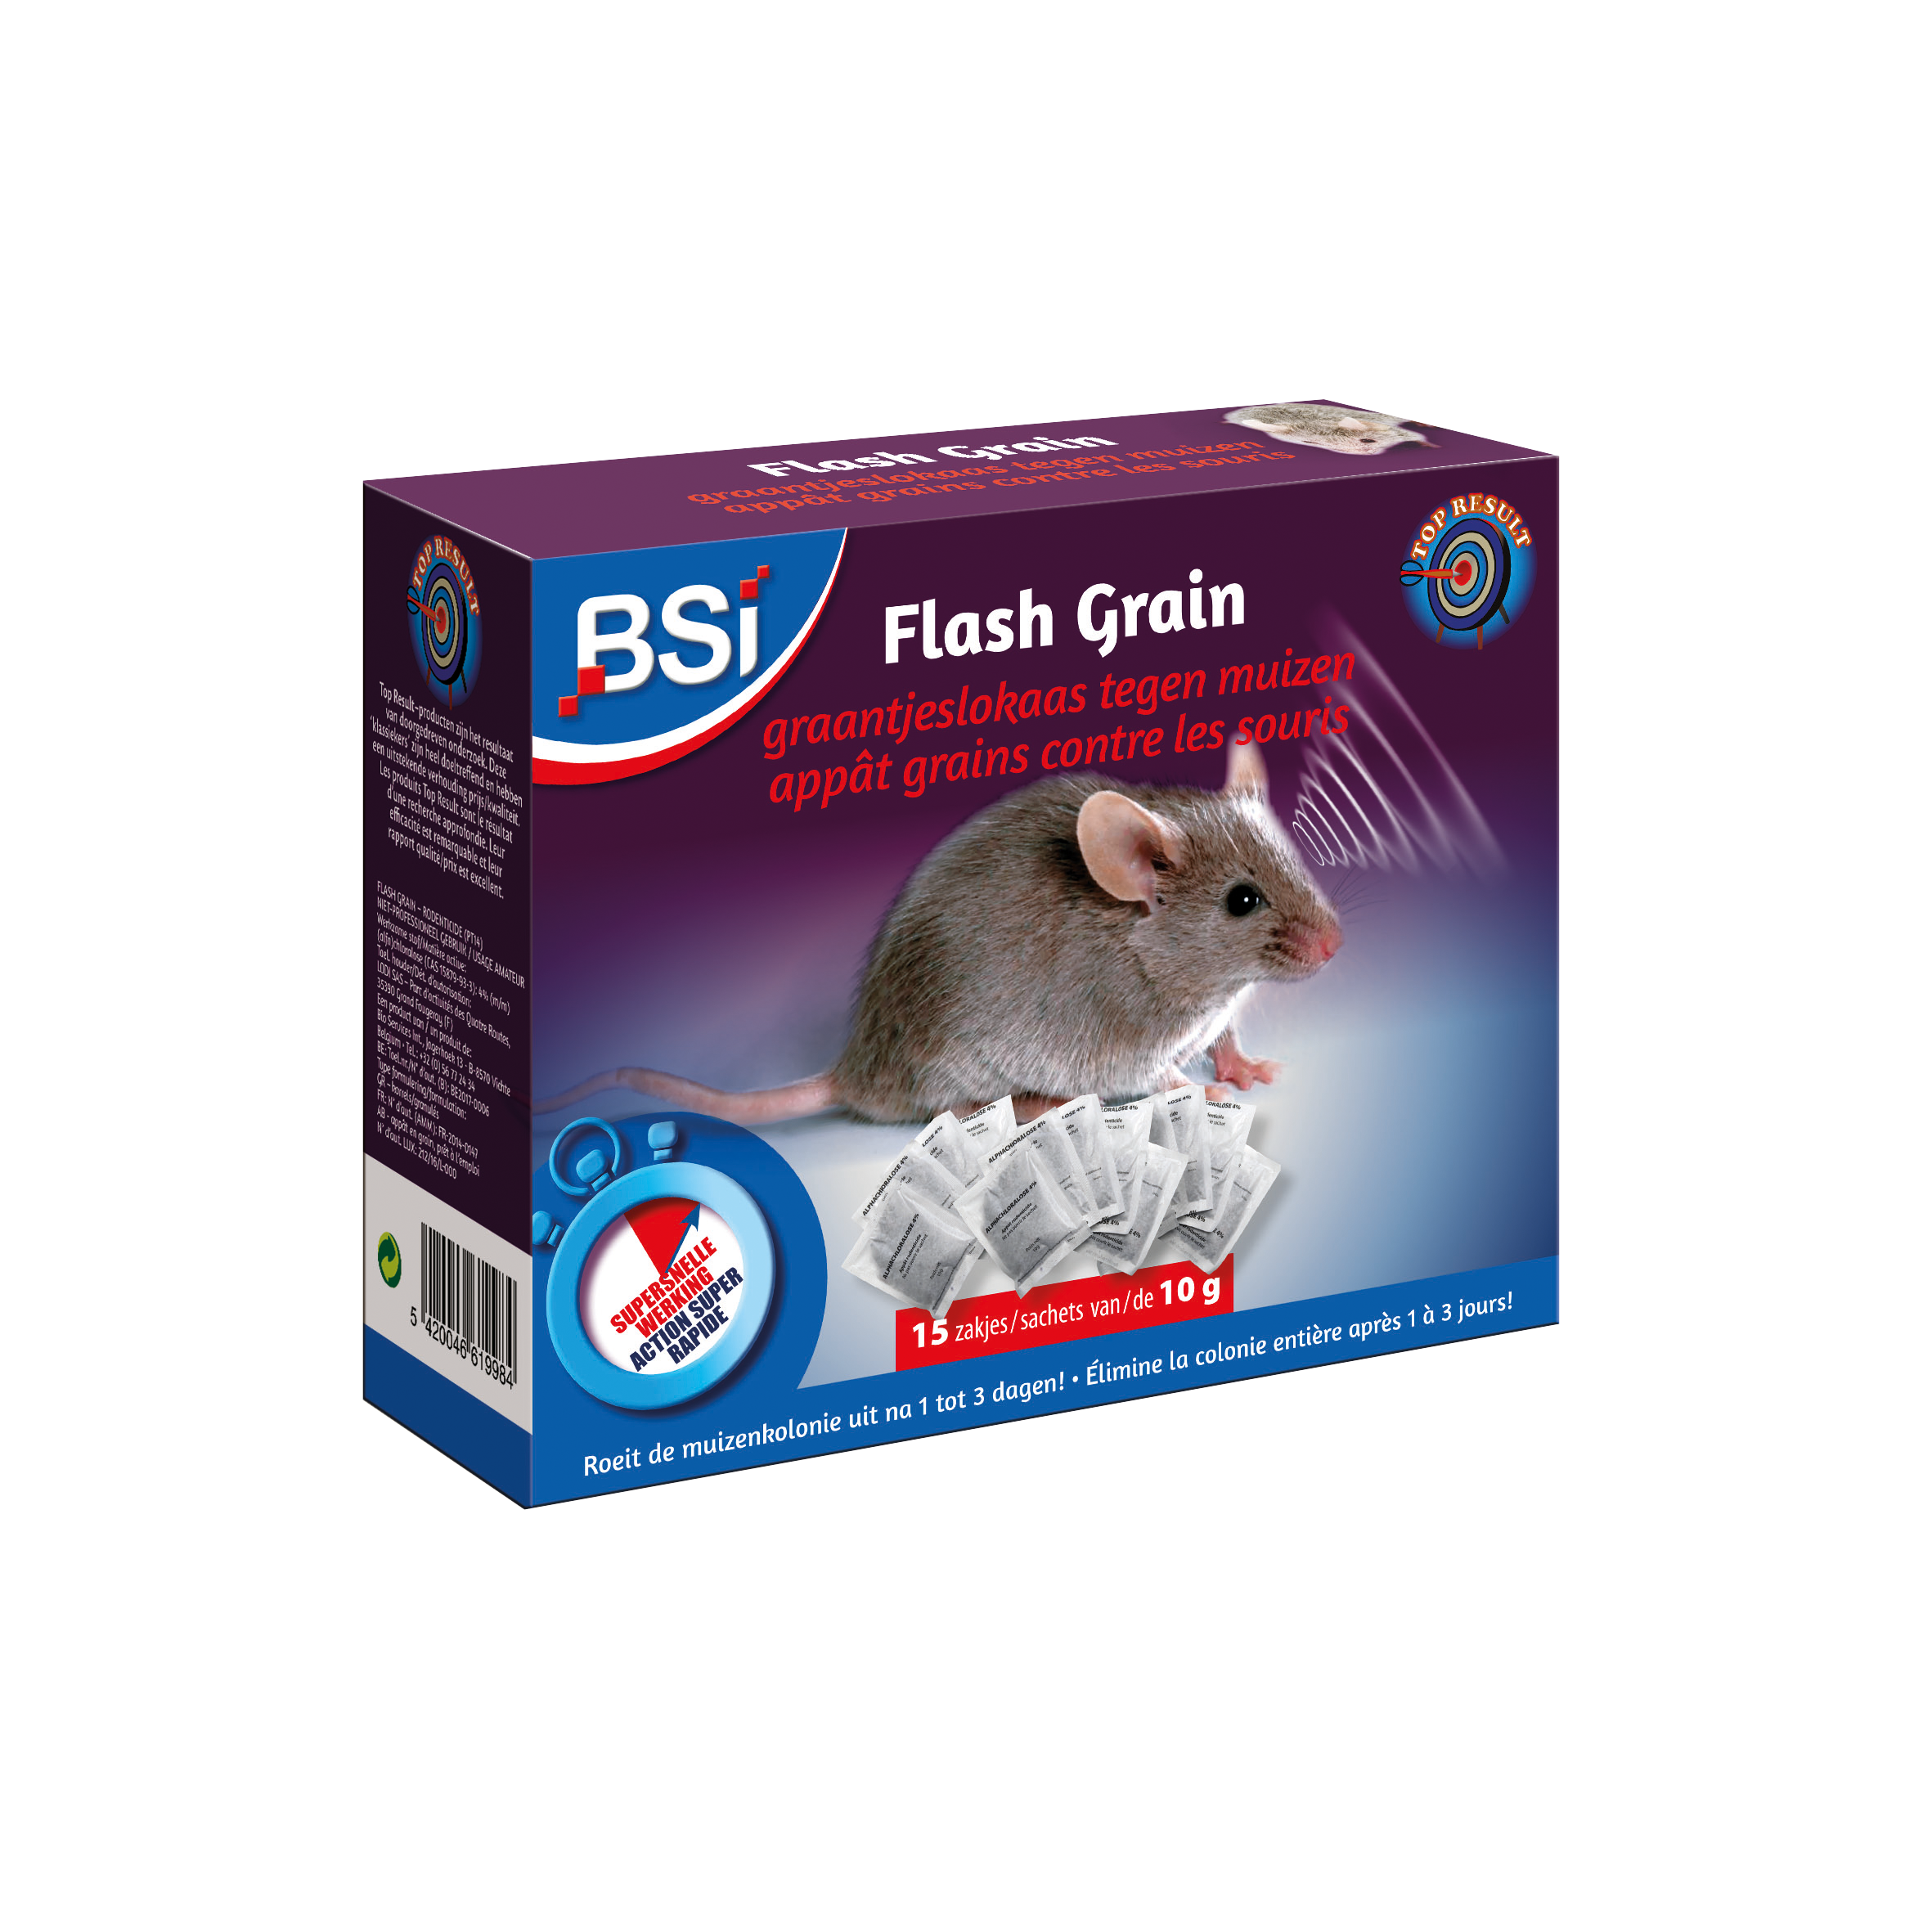 BSI Flash Grain 15x10 g image